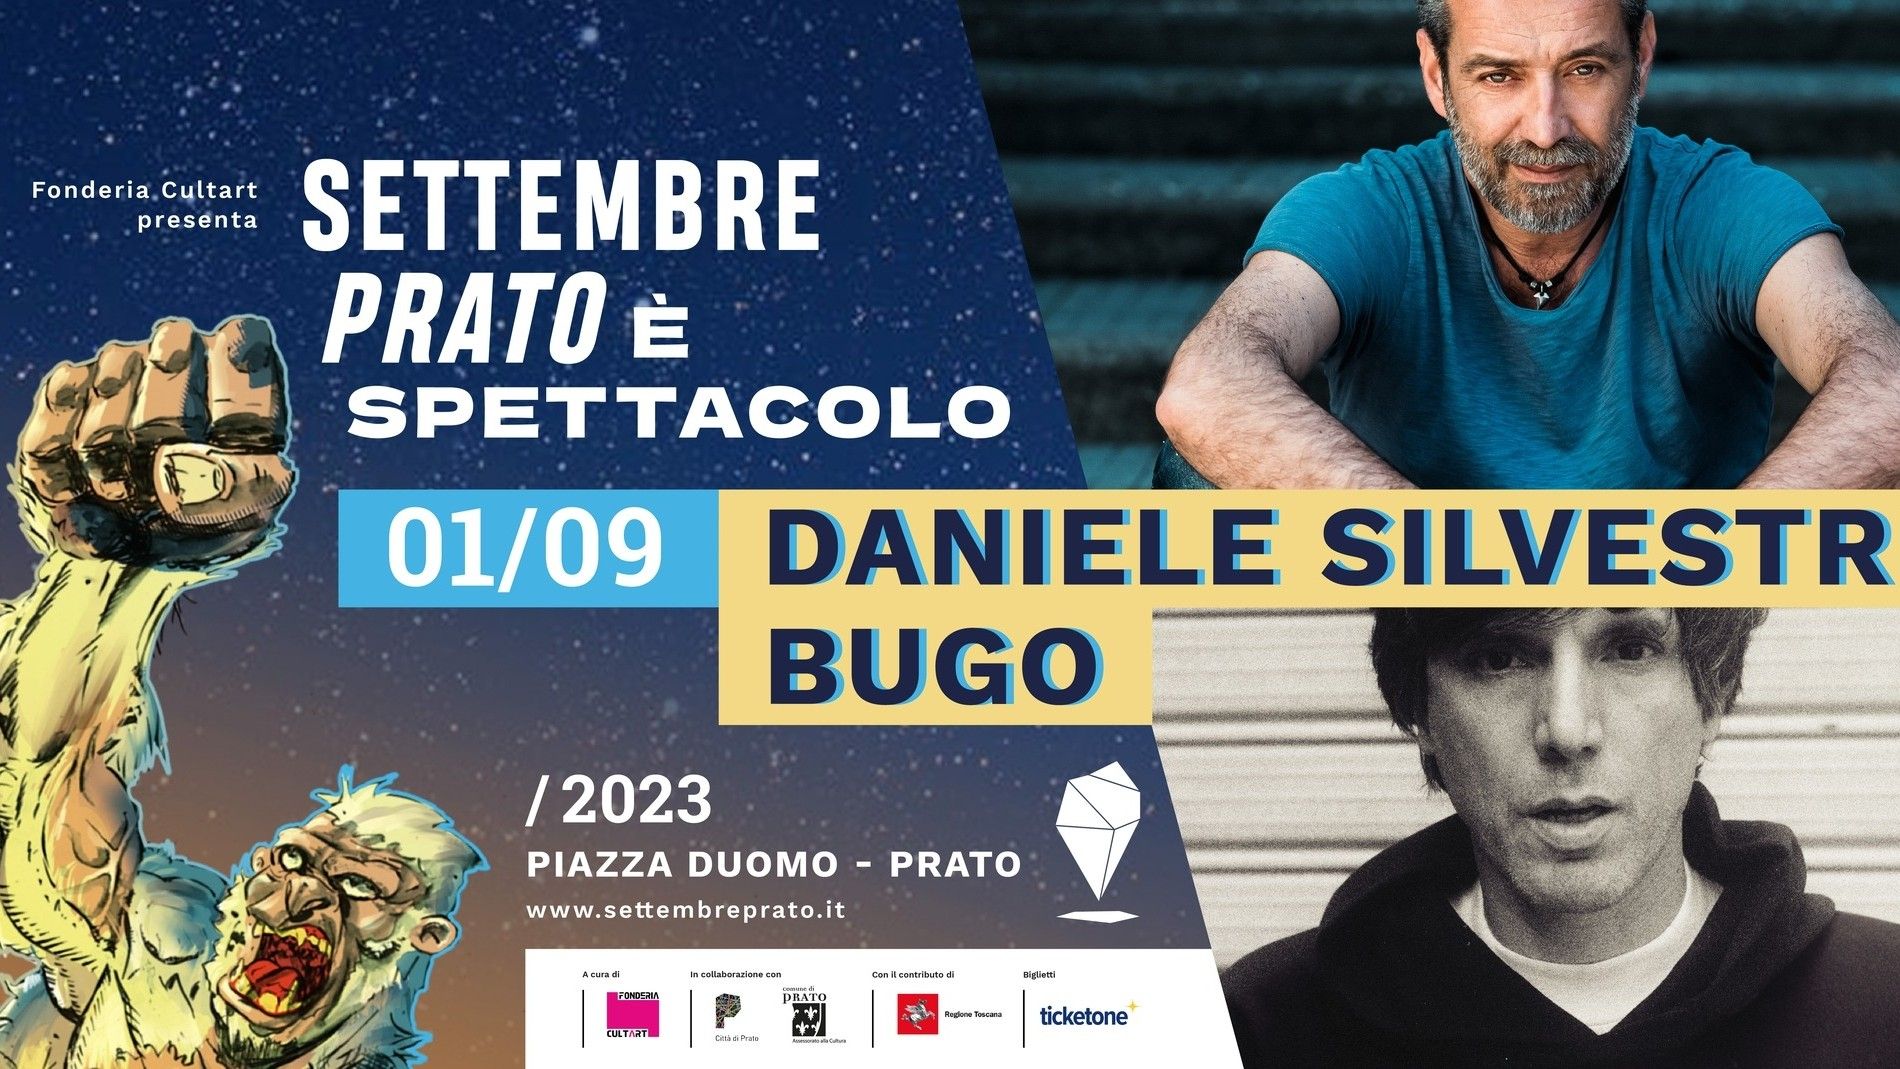 Daniele Silvestri / Bugo